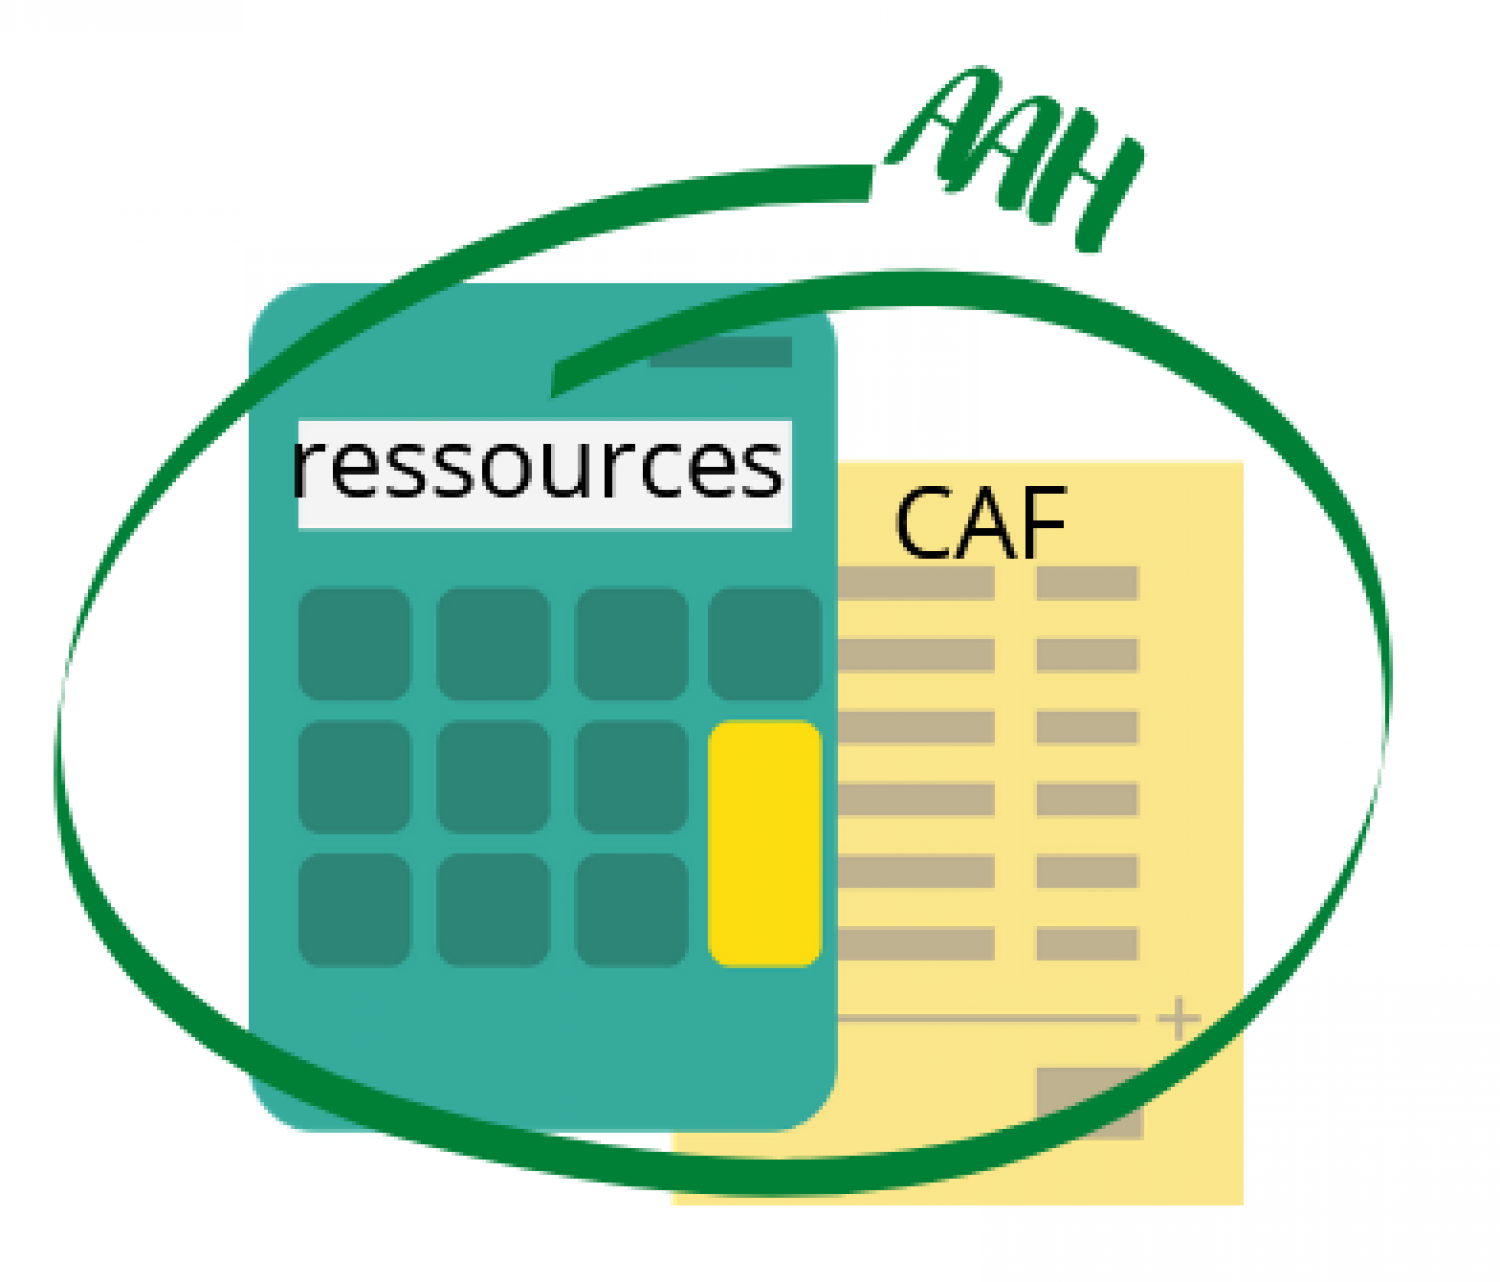 20201221125707-declaration-ressources-aah-caf.png